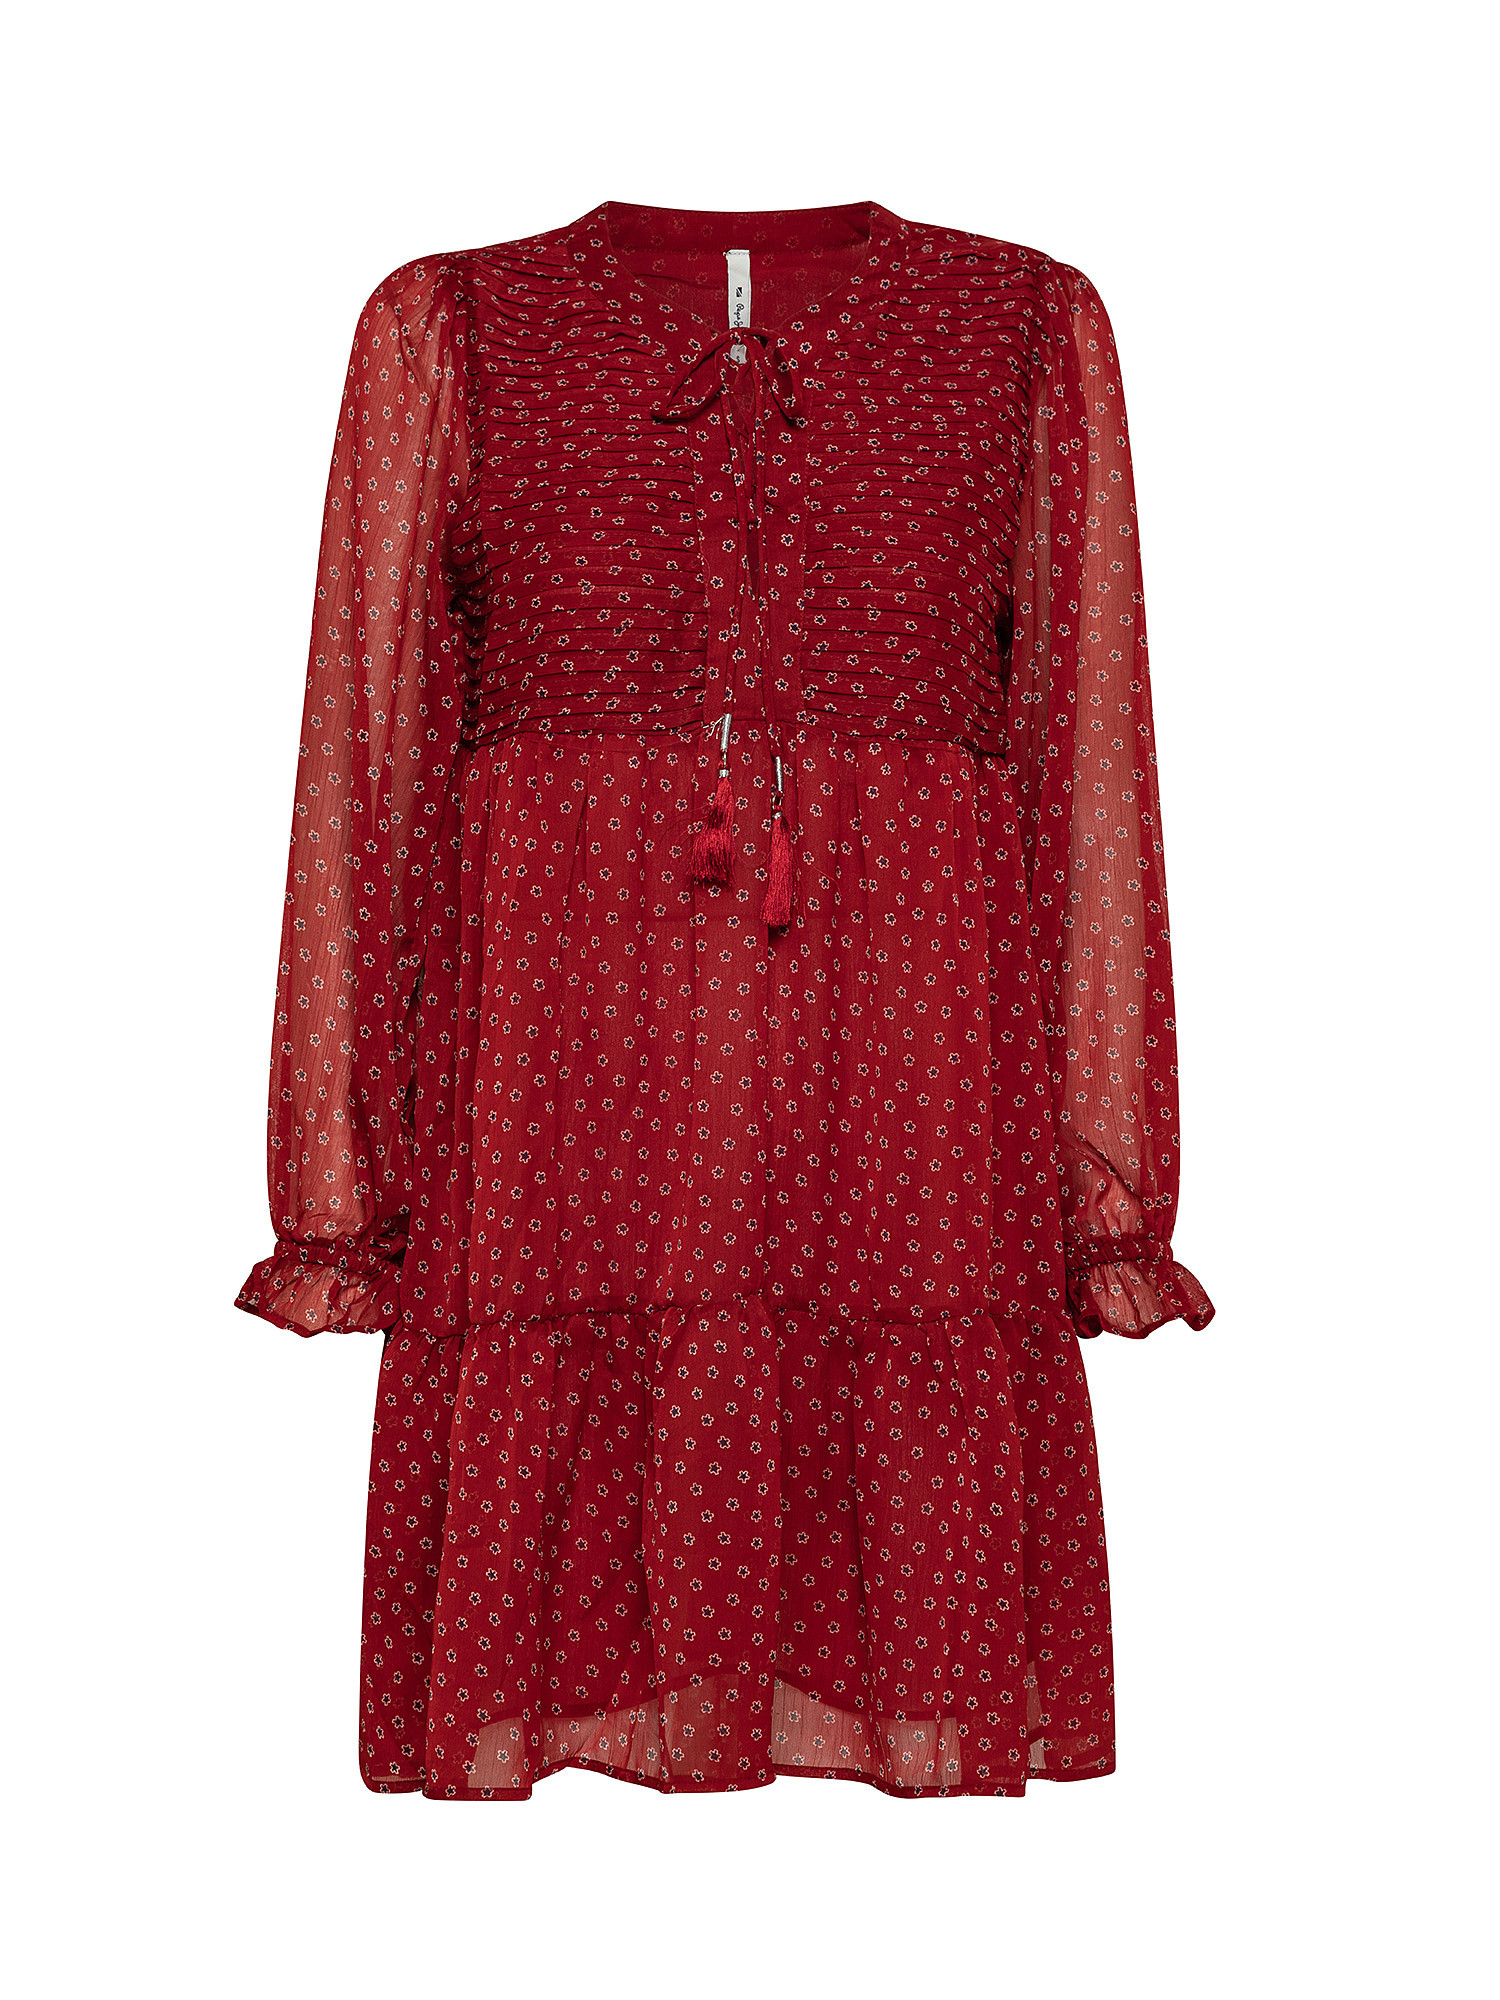 Eleonora short dress, Brick Red, large image number 0